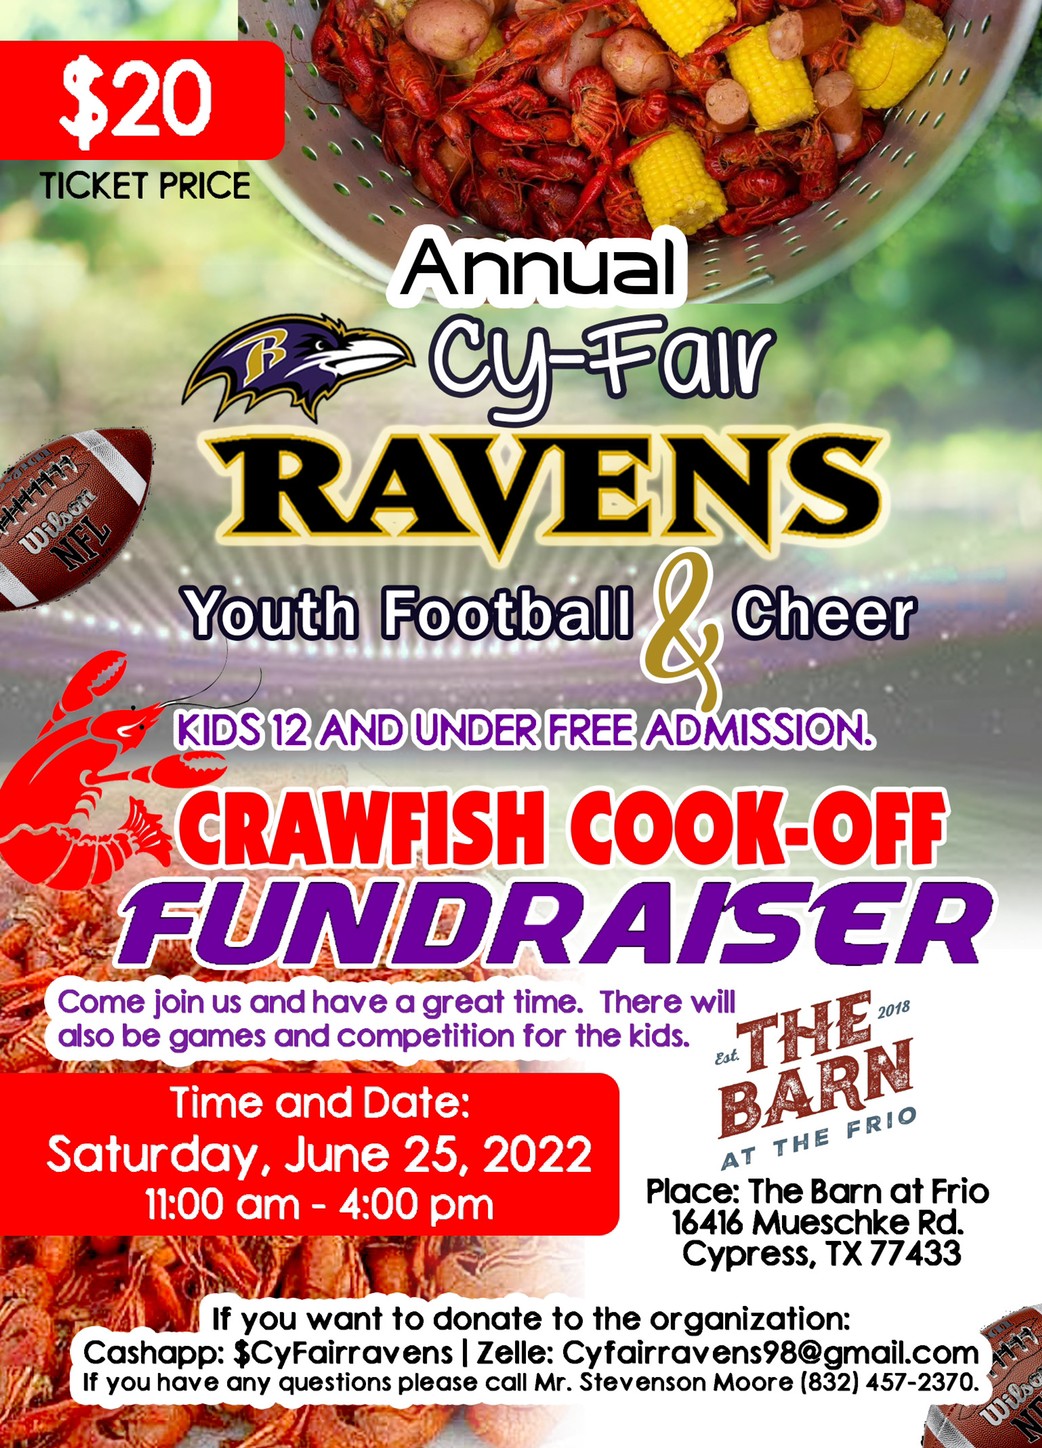 Cy-Fair Ravens Annual Crawfish Cookoff Fundraiser